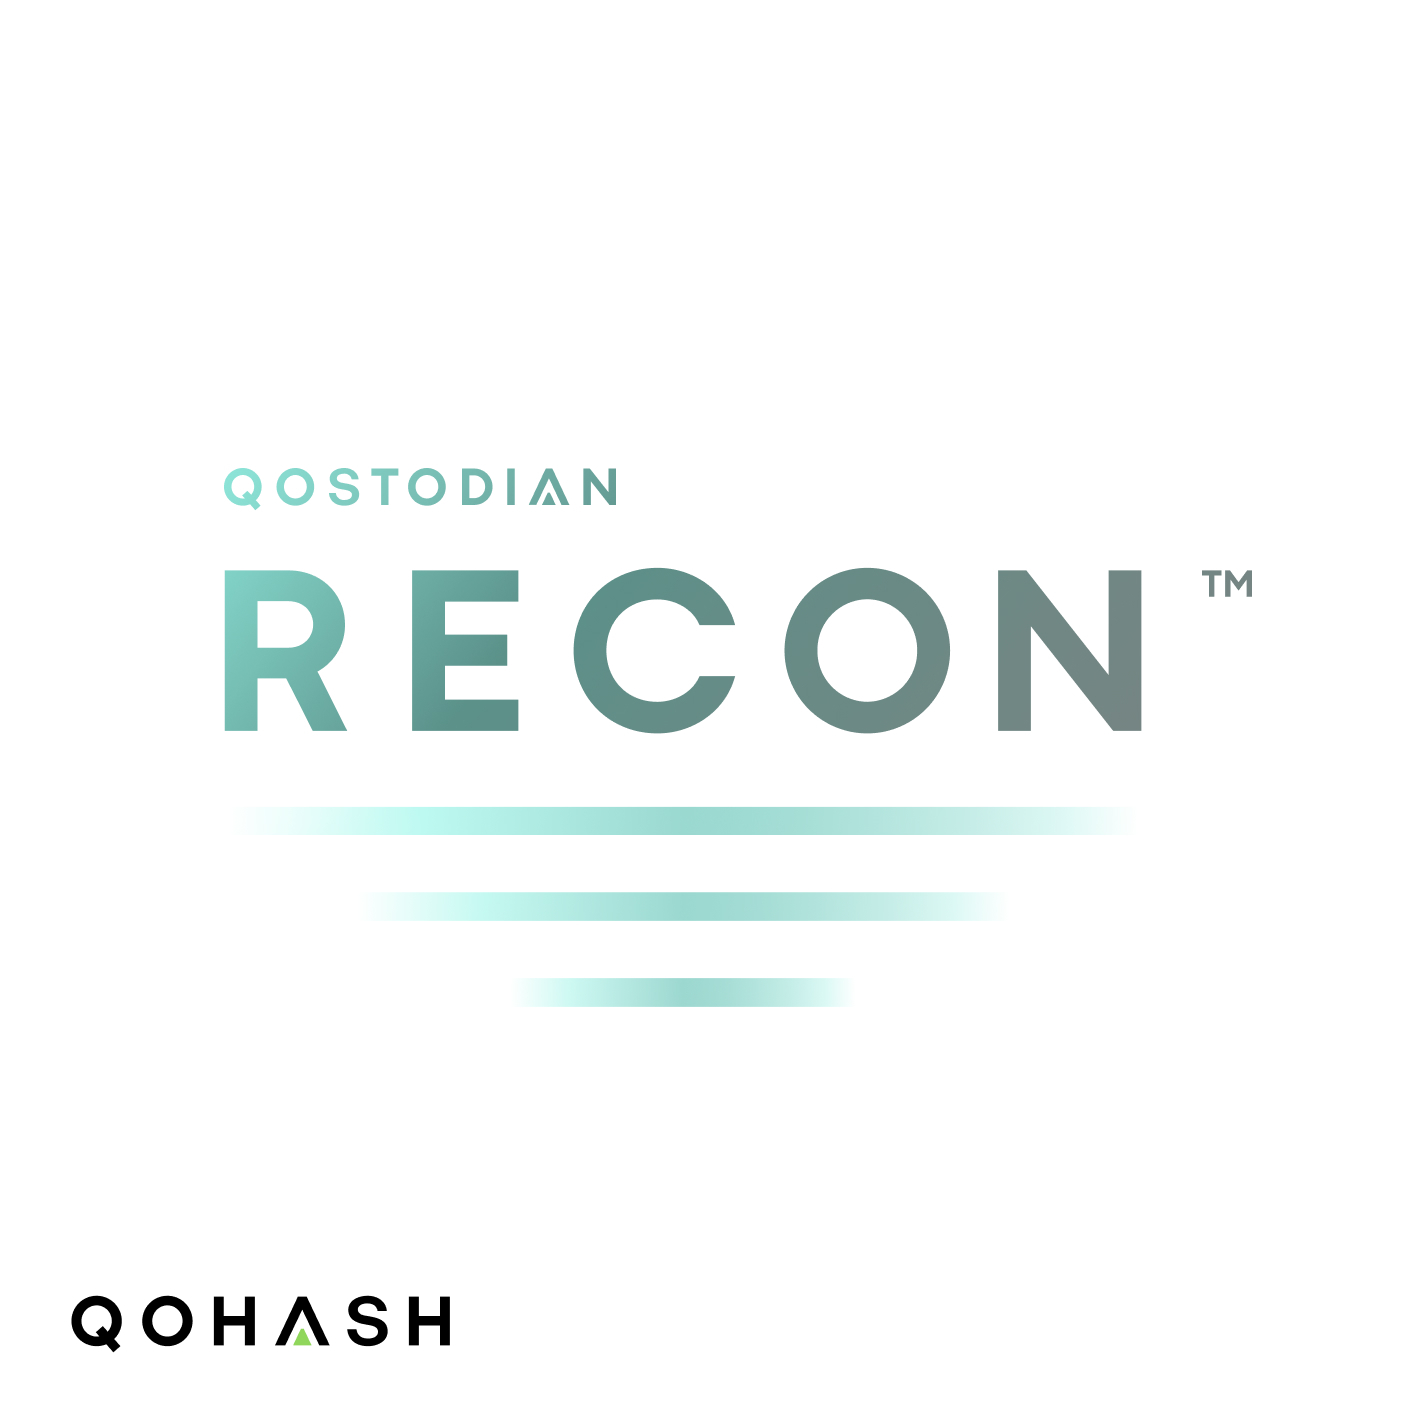 Qohash Launches New Qostodian Recon